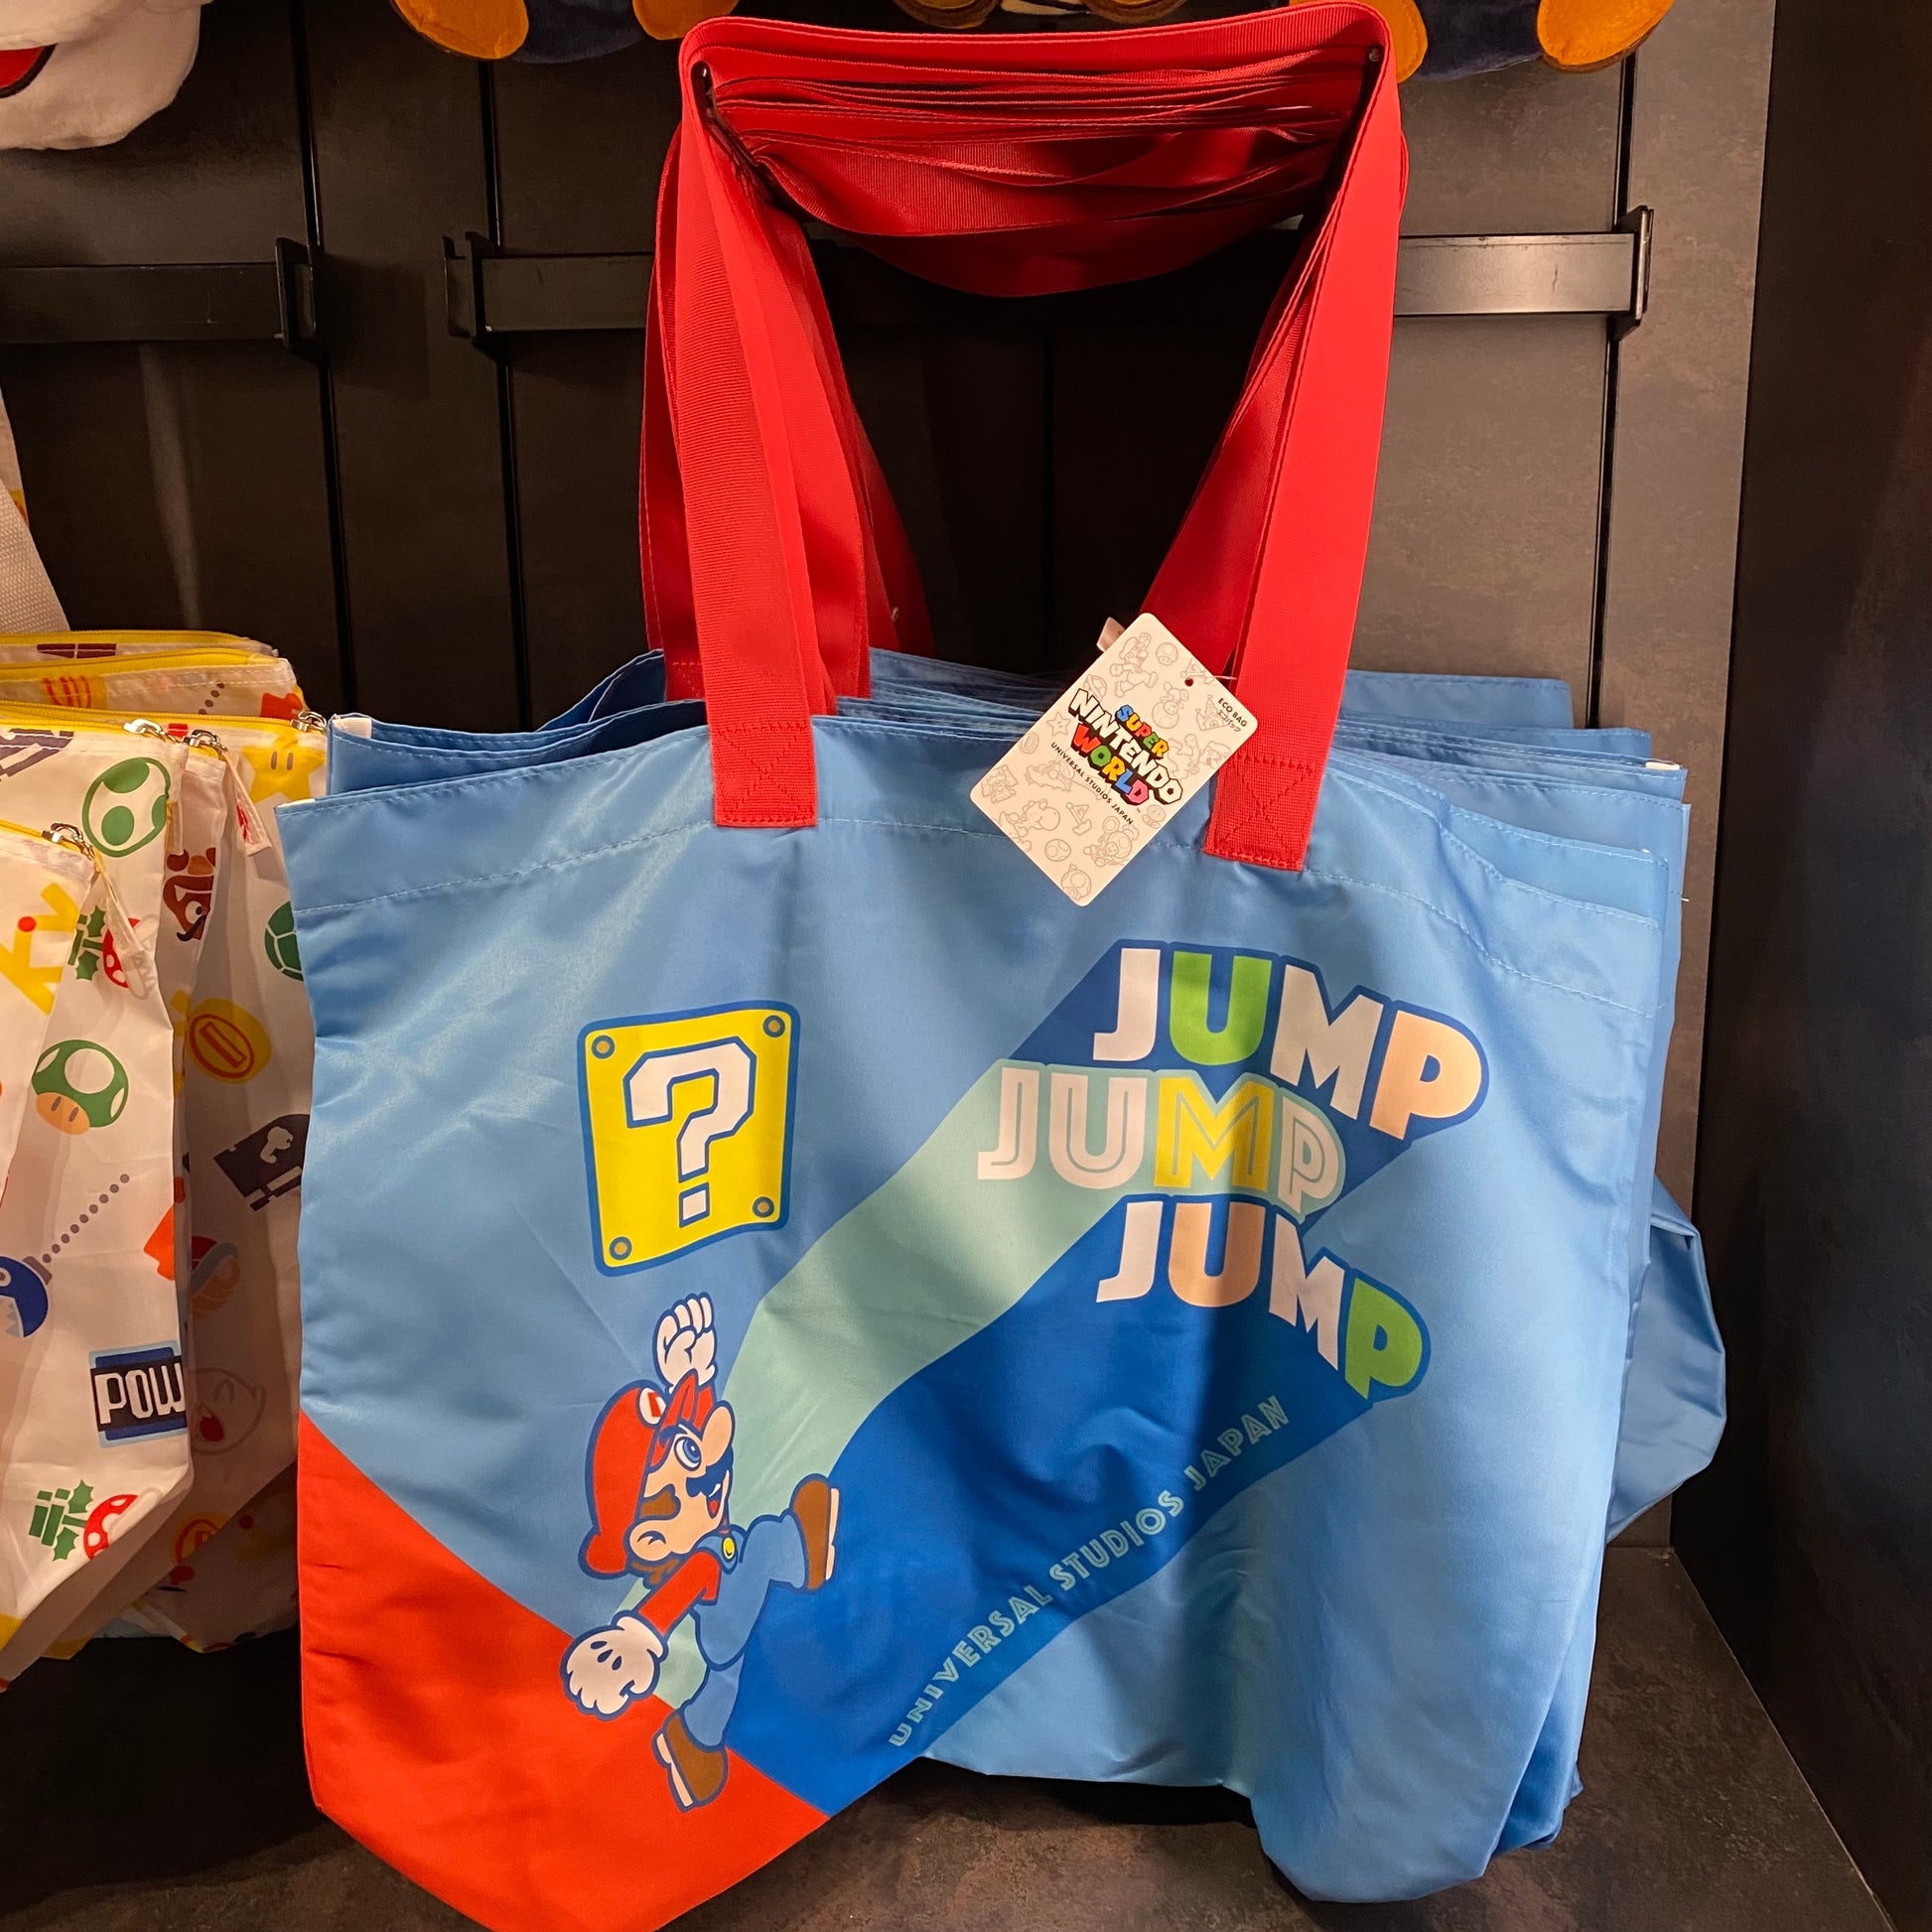 USJ Mario JUMP 環保袋 購物袋